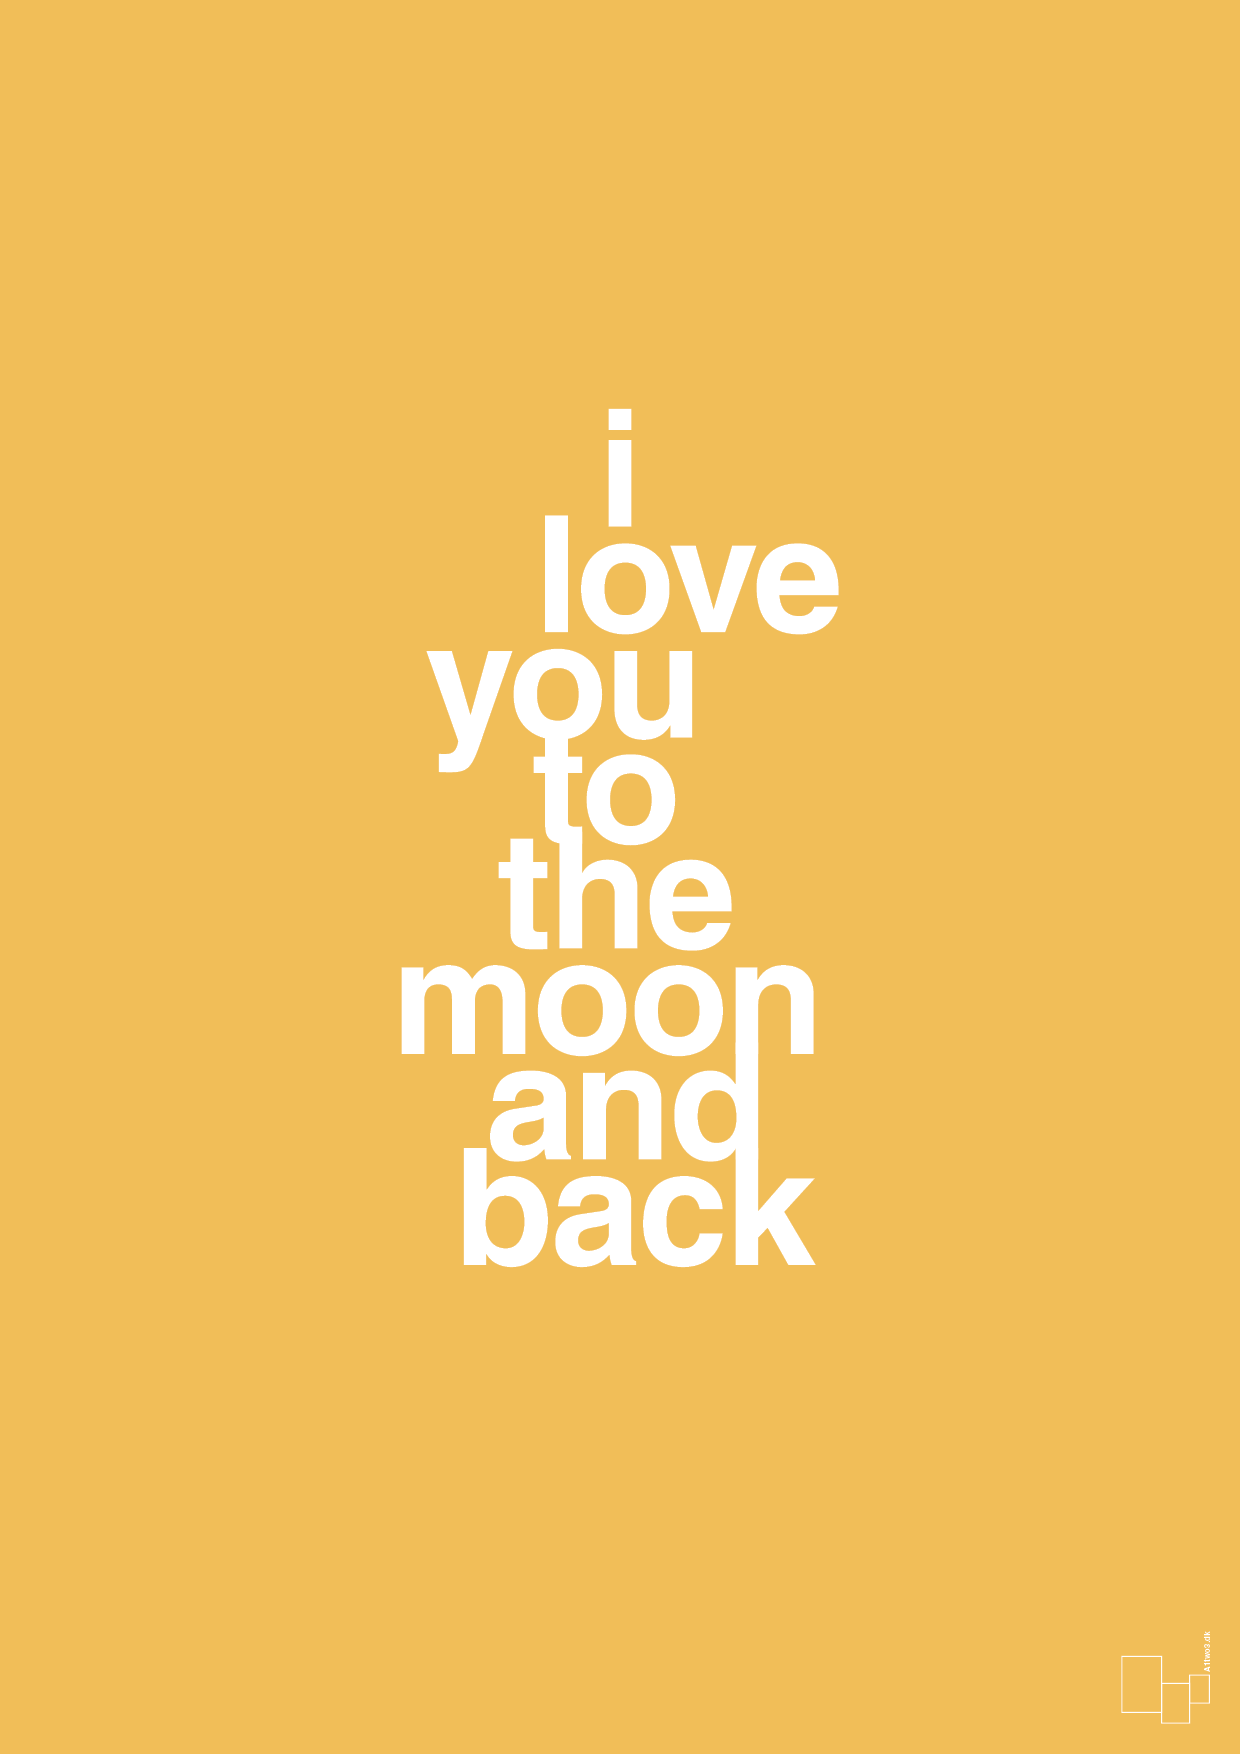 i love you to the moon and back - Plakat med Ordsprog i Honeycomb